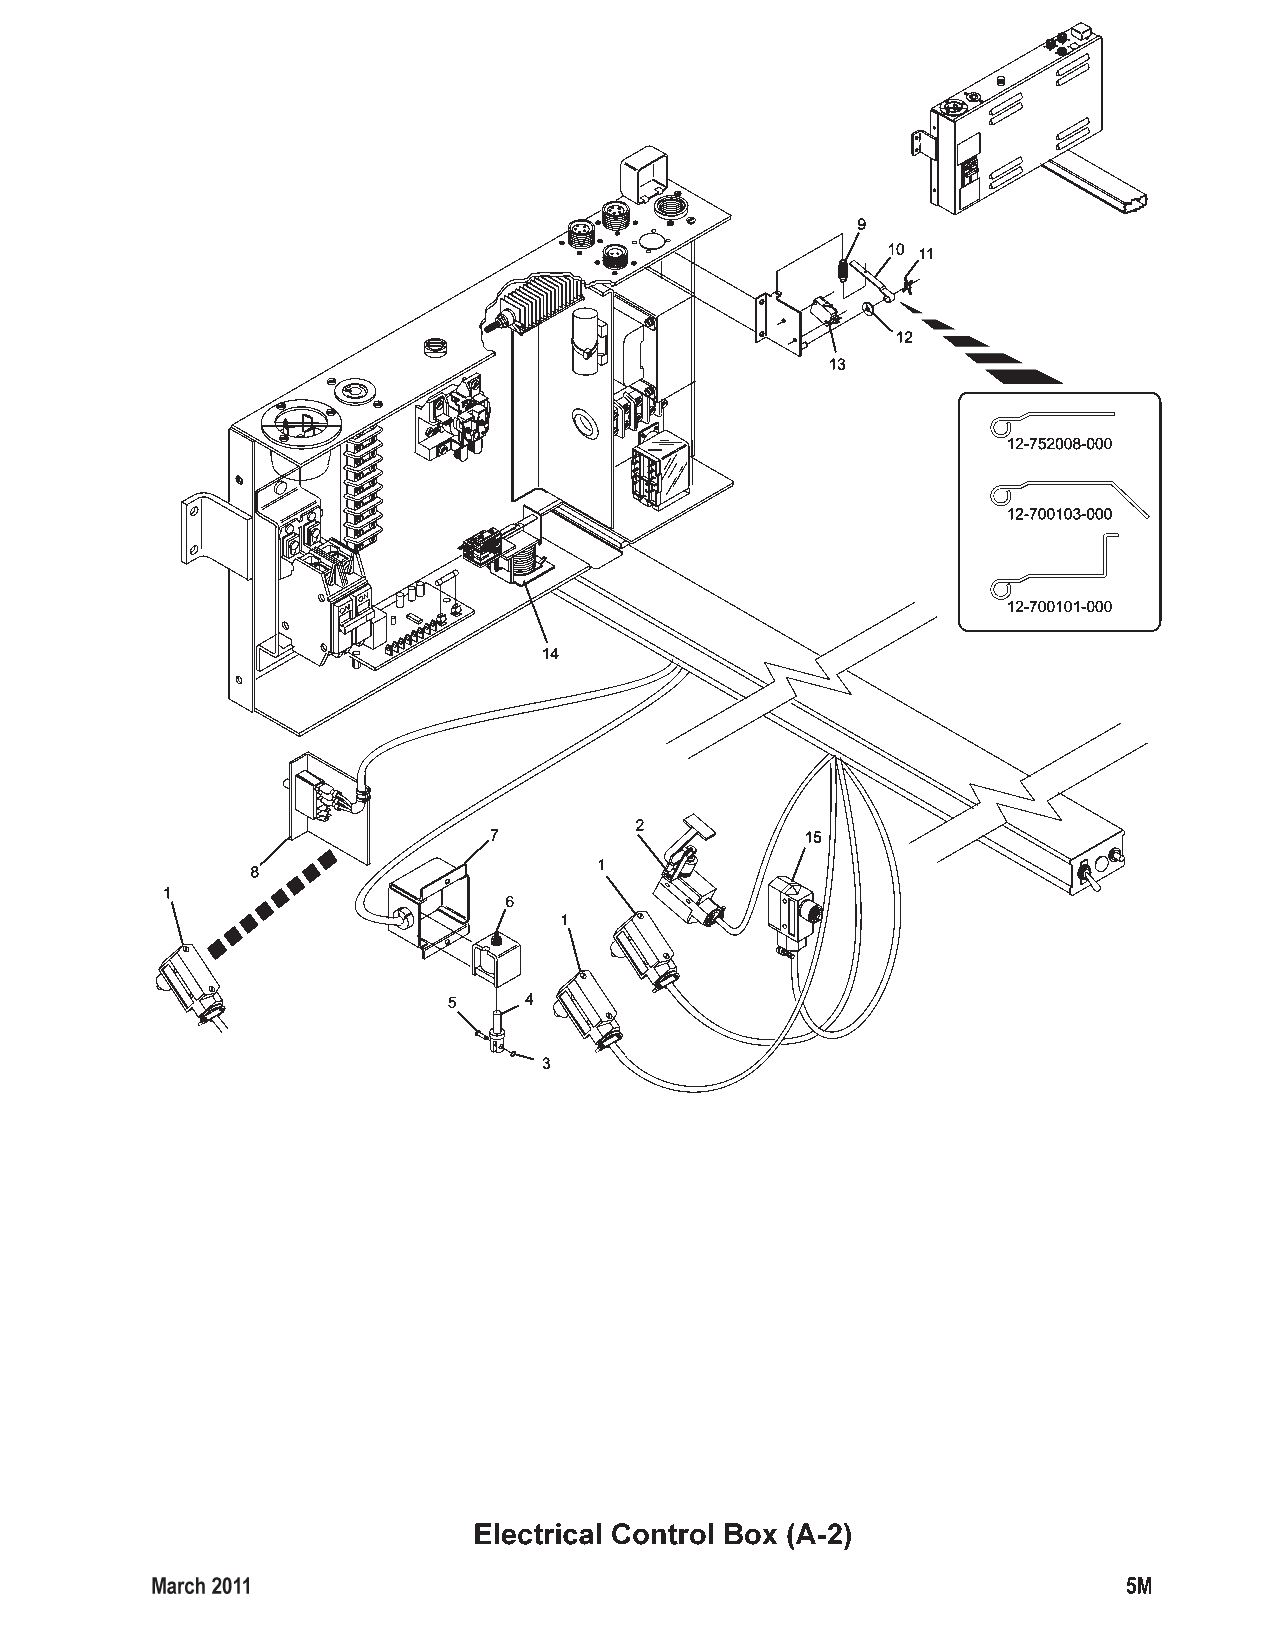 ElectricalControlBoxA_2